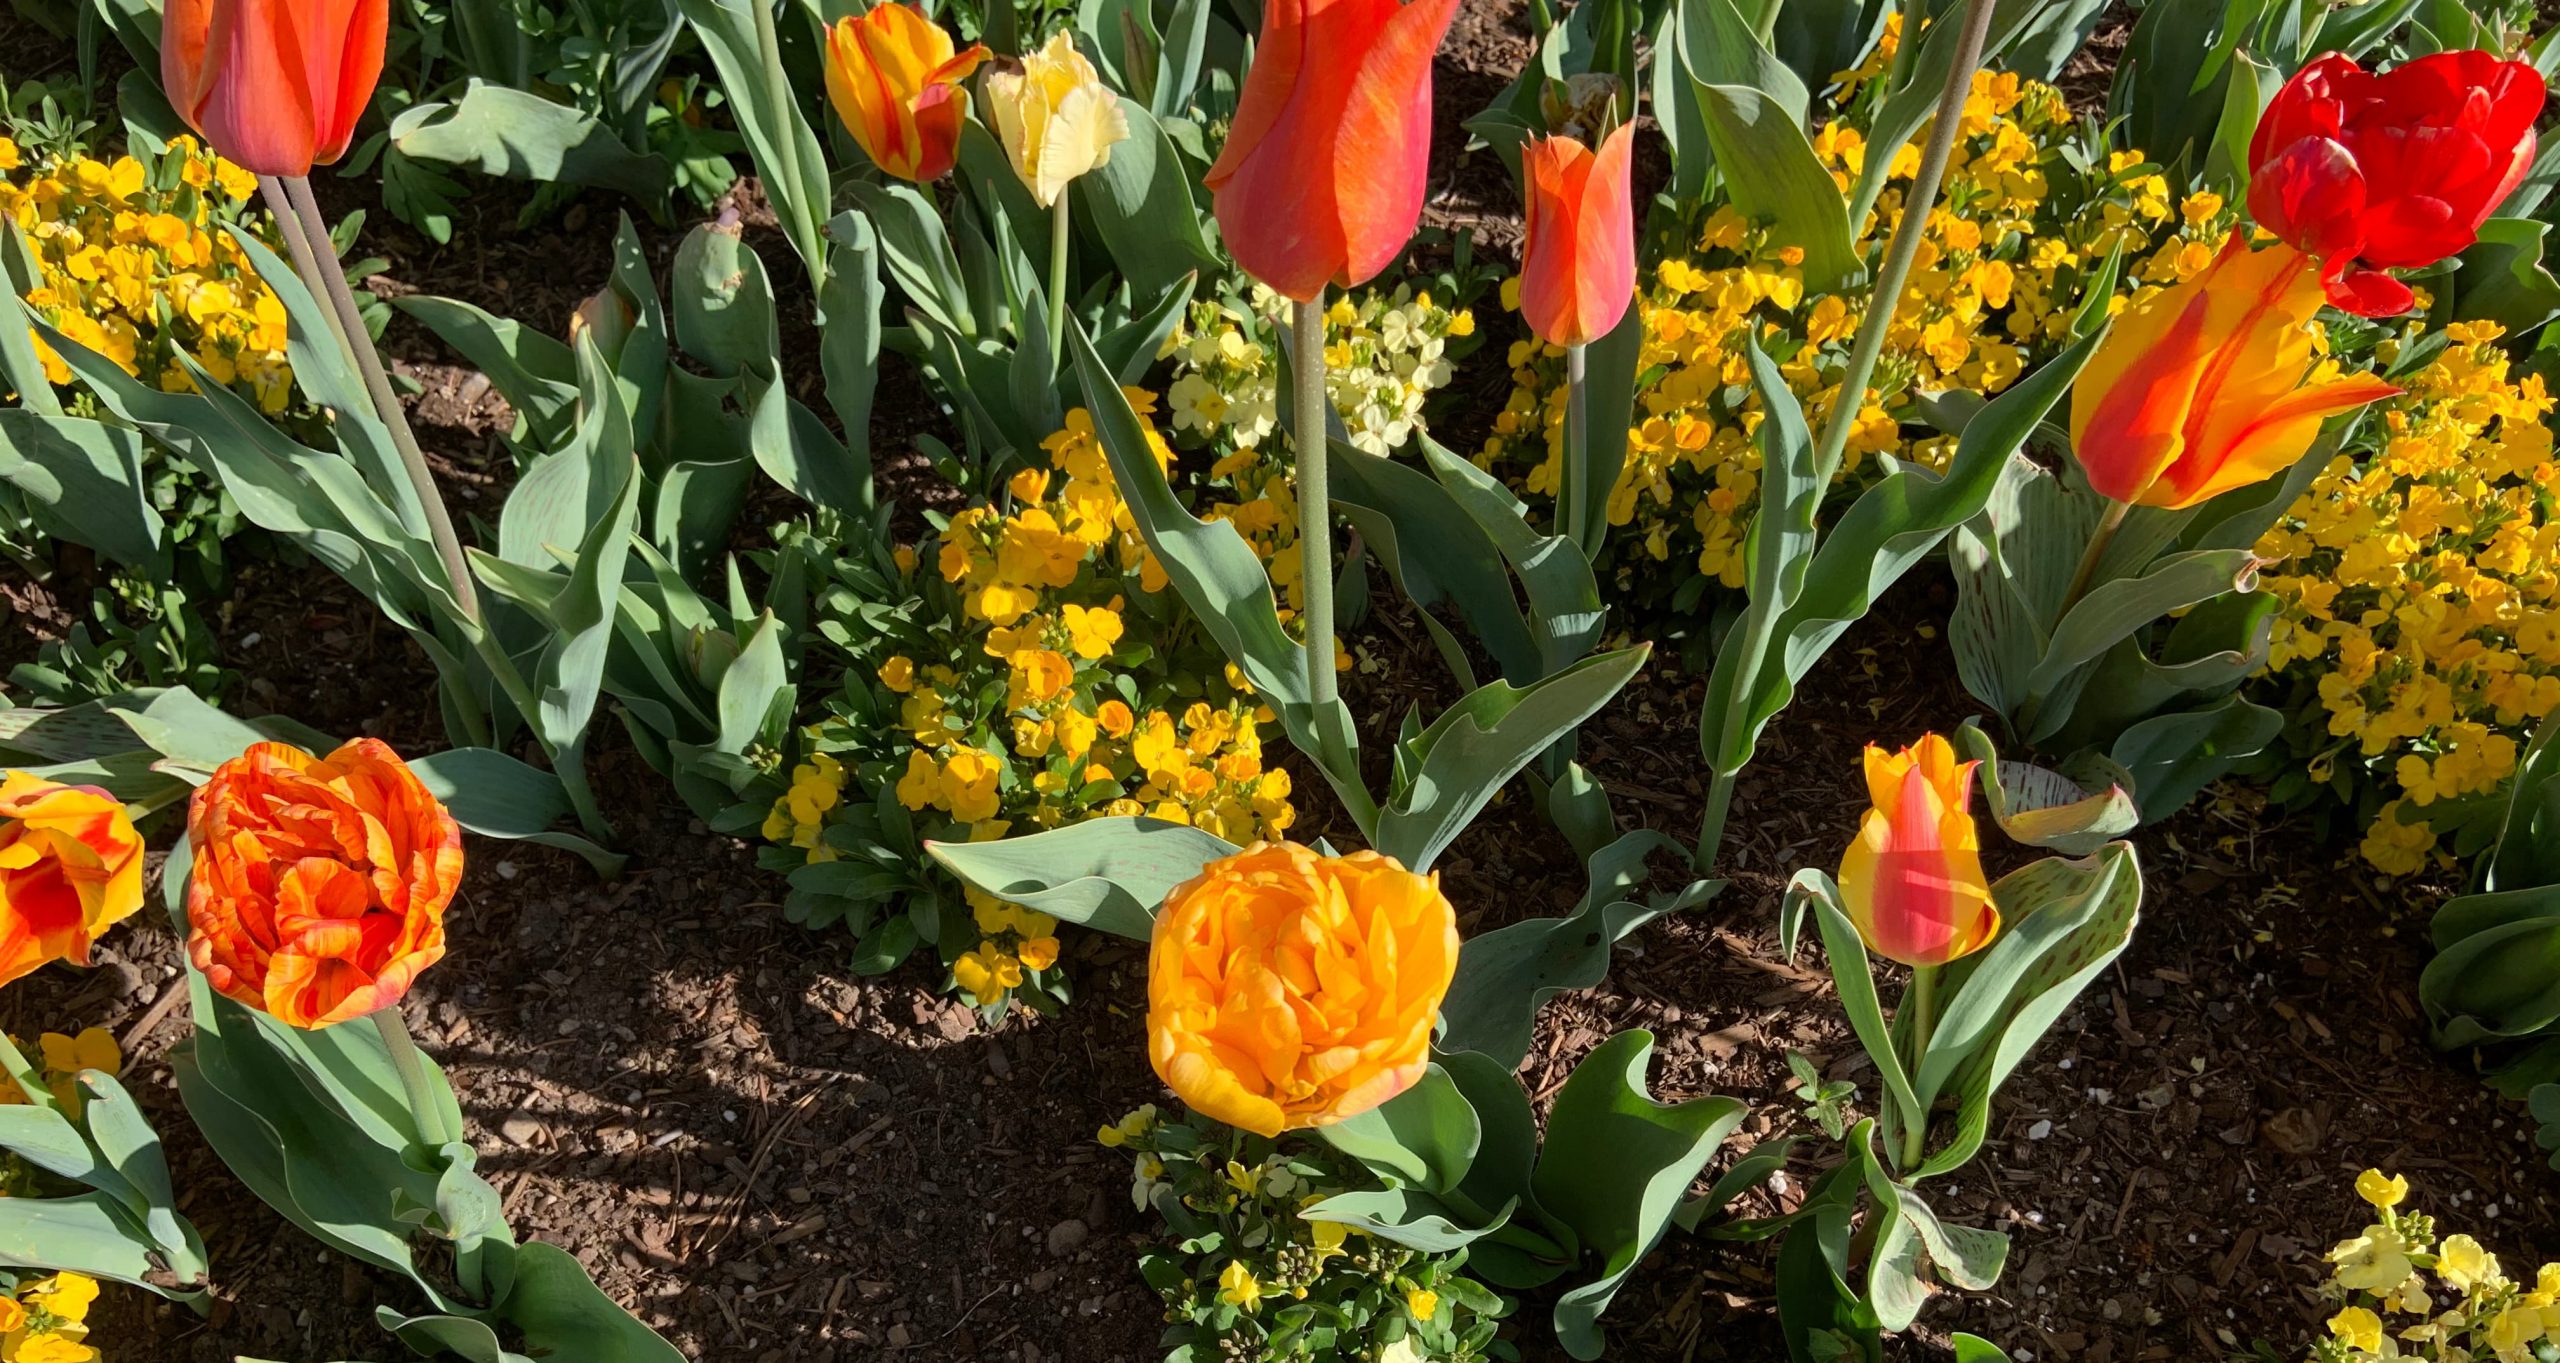 Yellow and orange tulips.